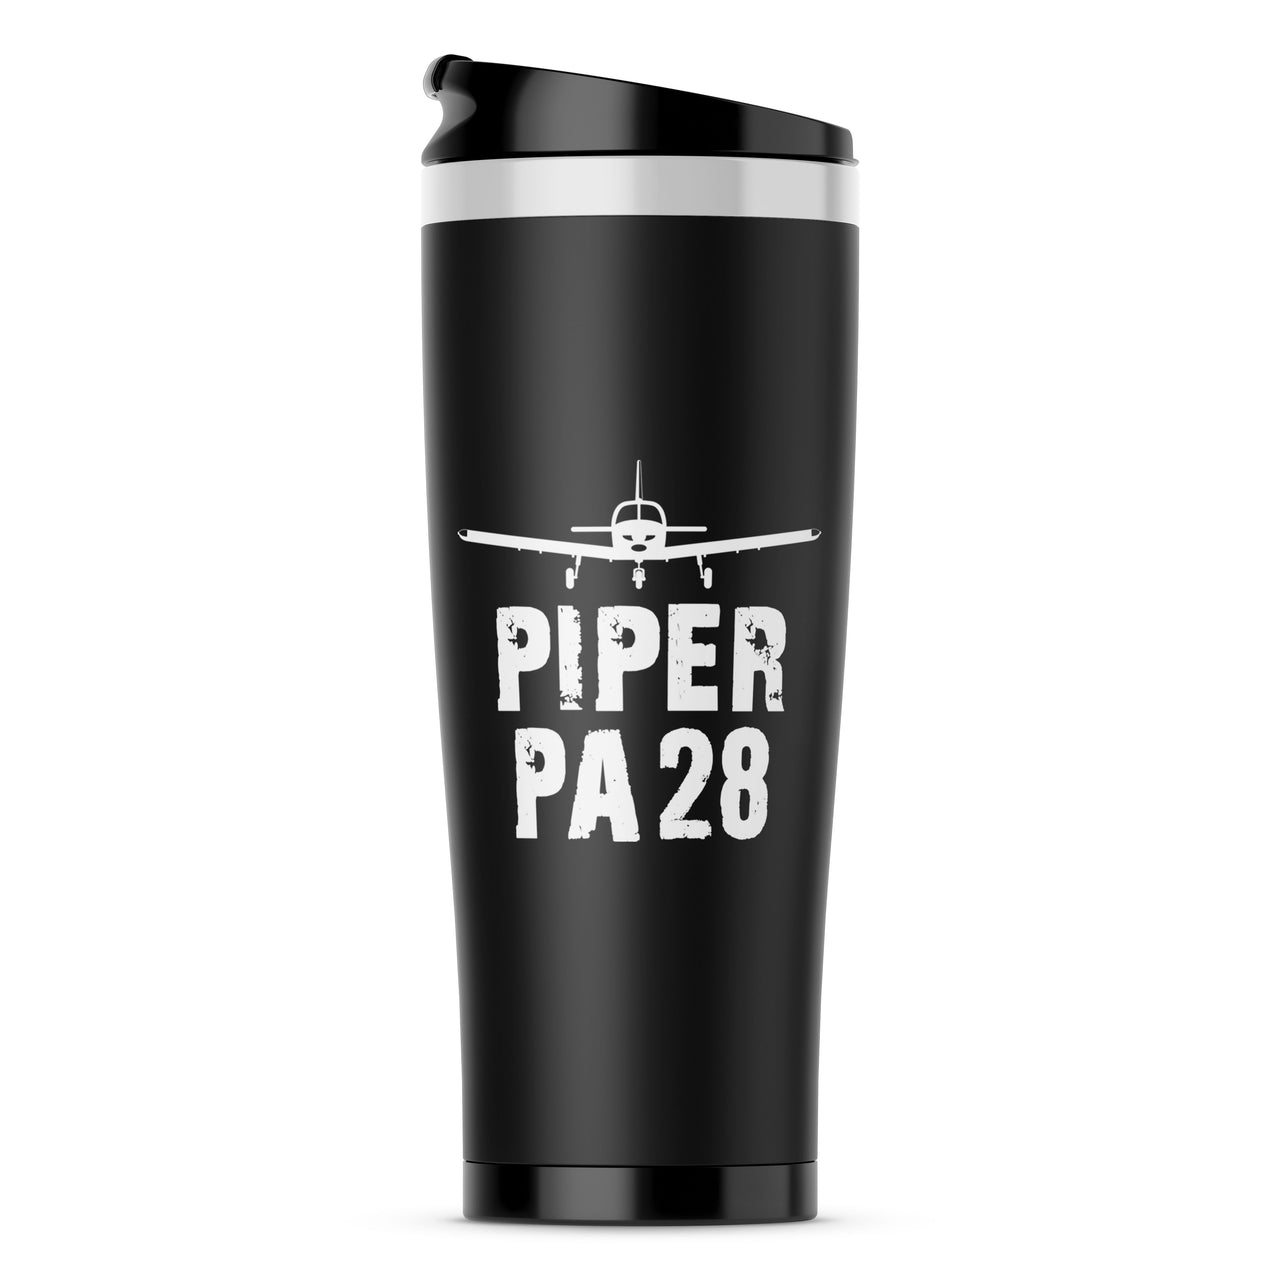 Piper PA28 & Plane Designed Travel Mugs